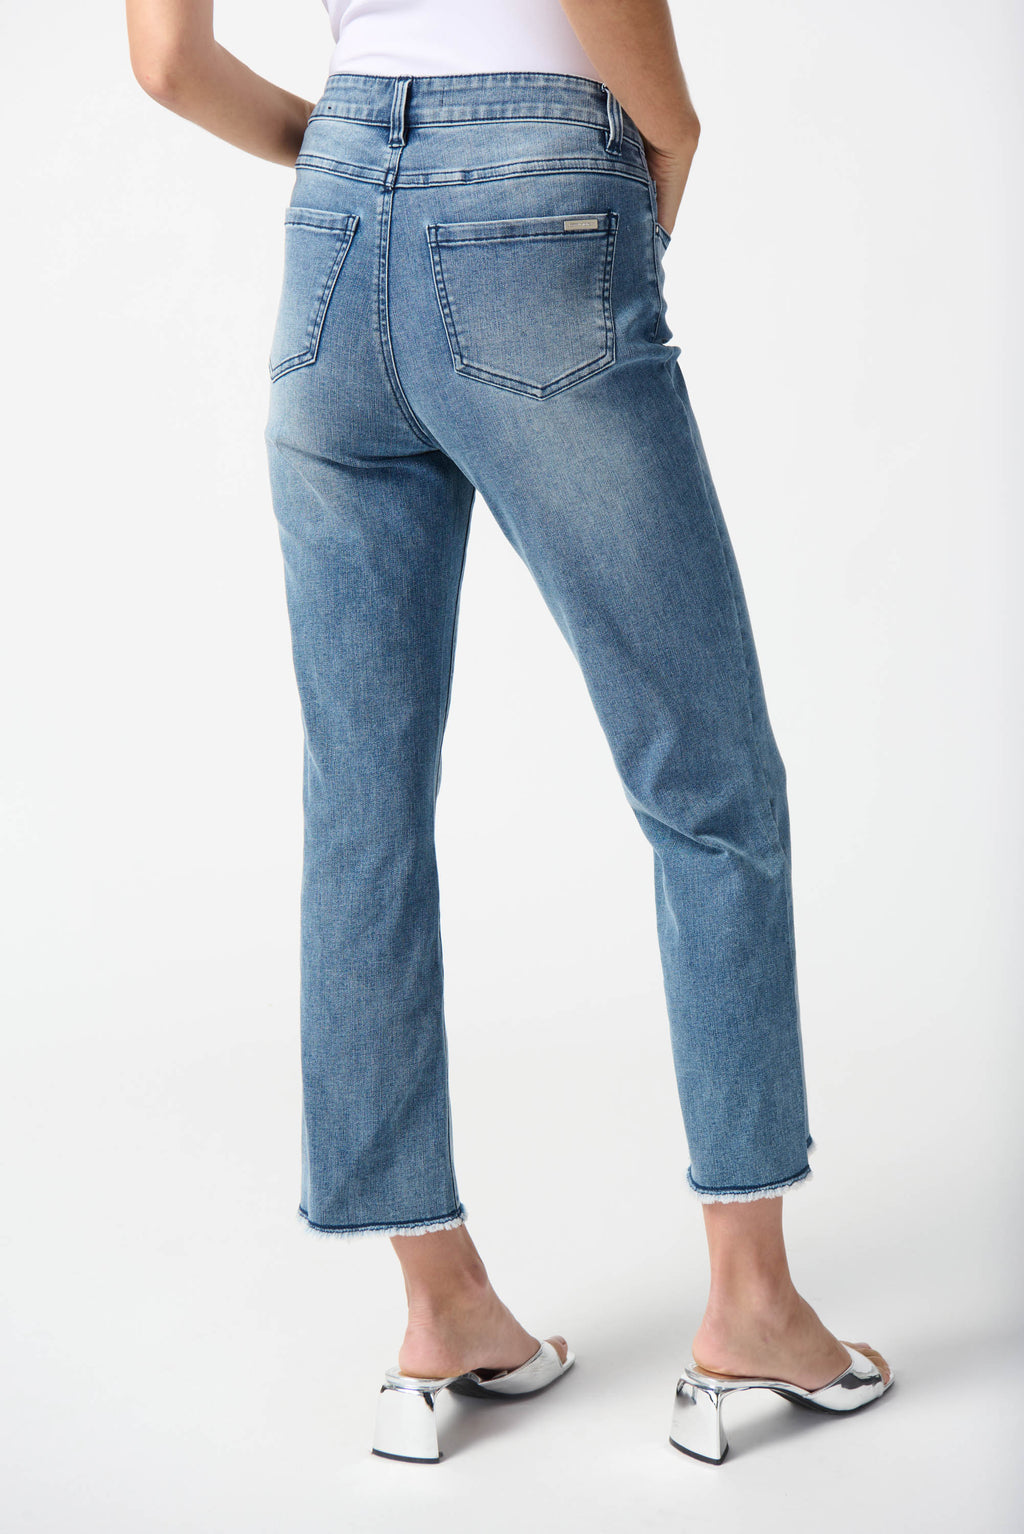 Joseph Ribkoff Denim Medium Blue Frayed Hem Straight Jeans Style 242922